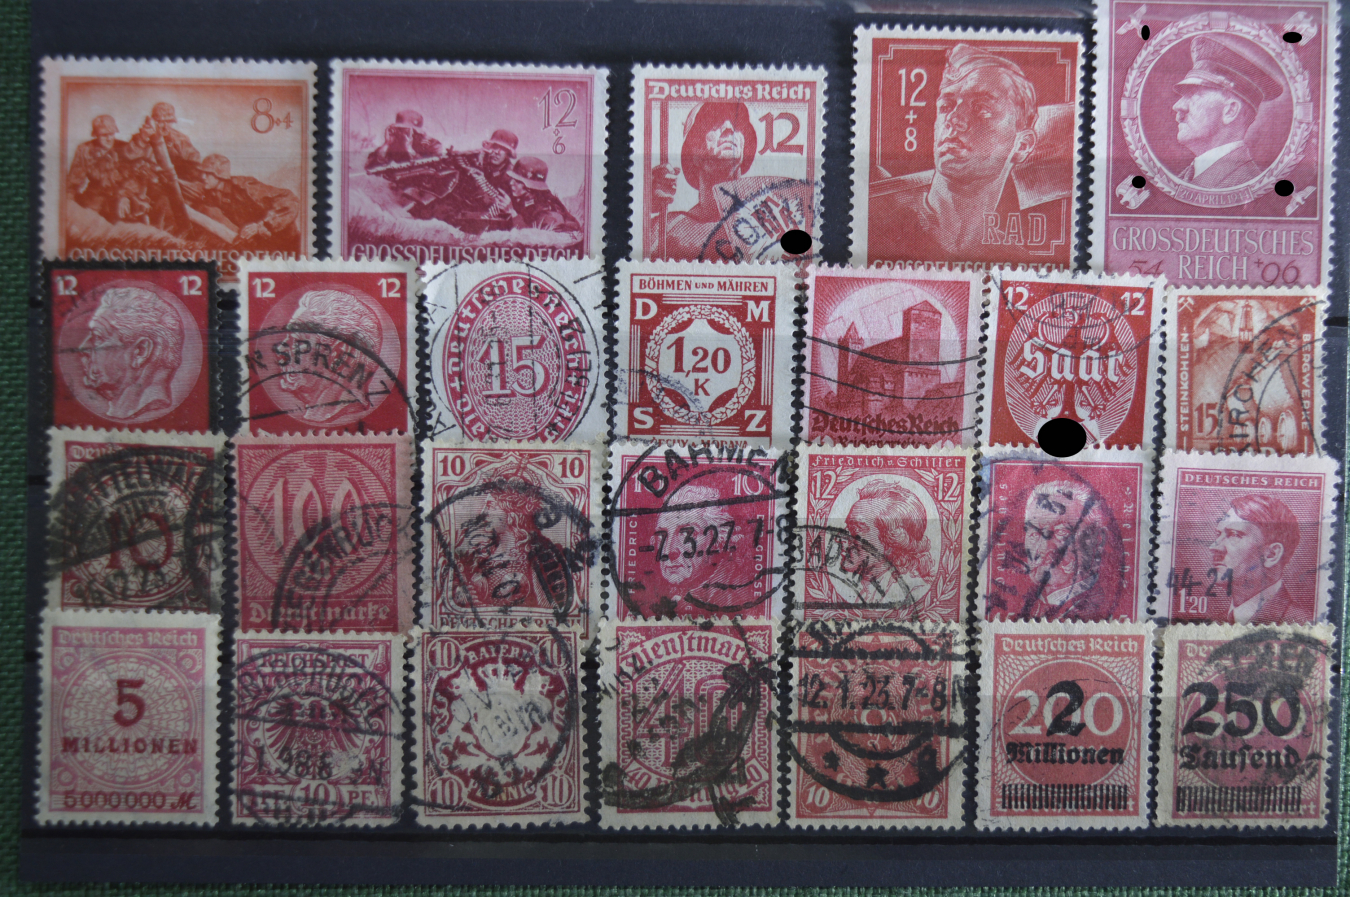 Почтовые марки Германия Рейх. Почтовая марка Deutsches Reich. Марки Веймар Германия. El-stamps почтовые марки.